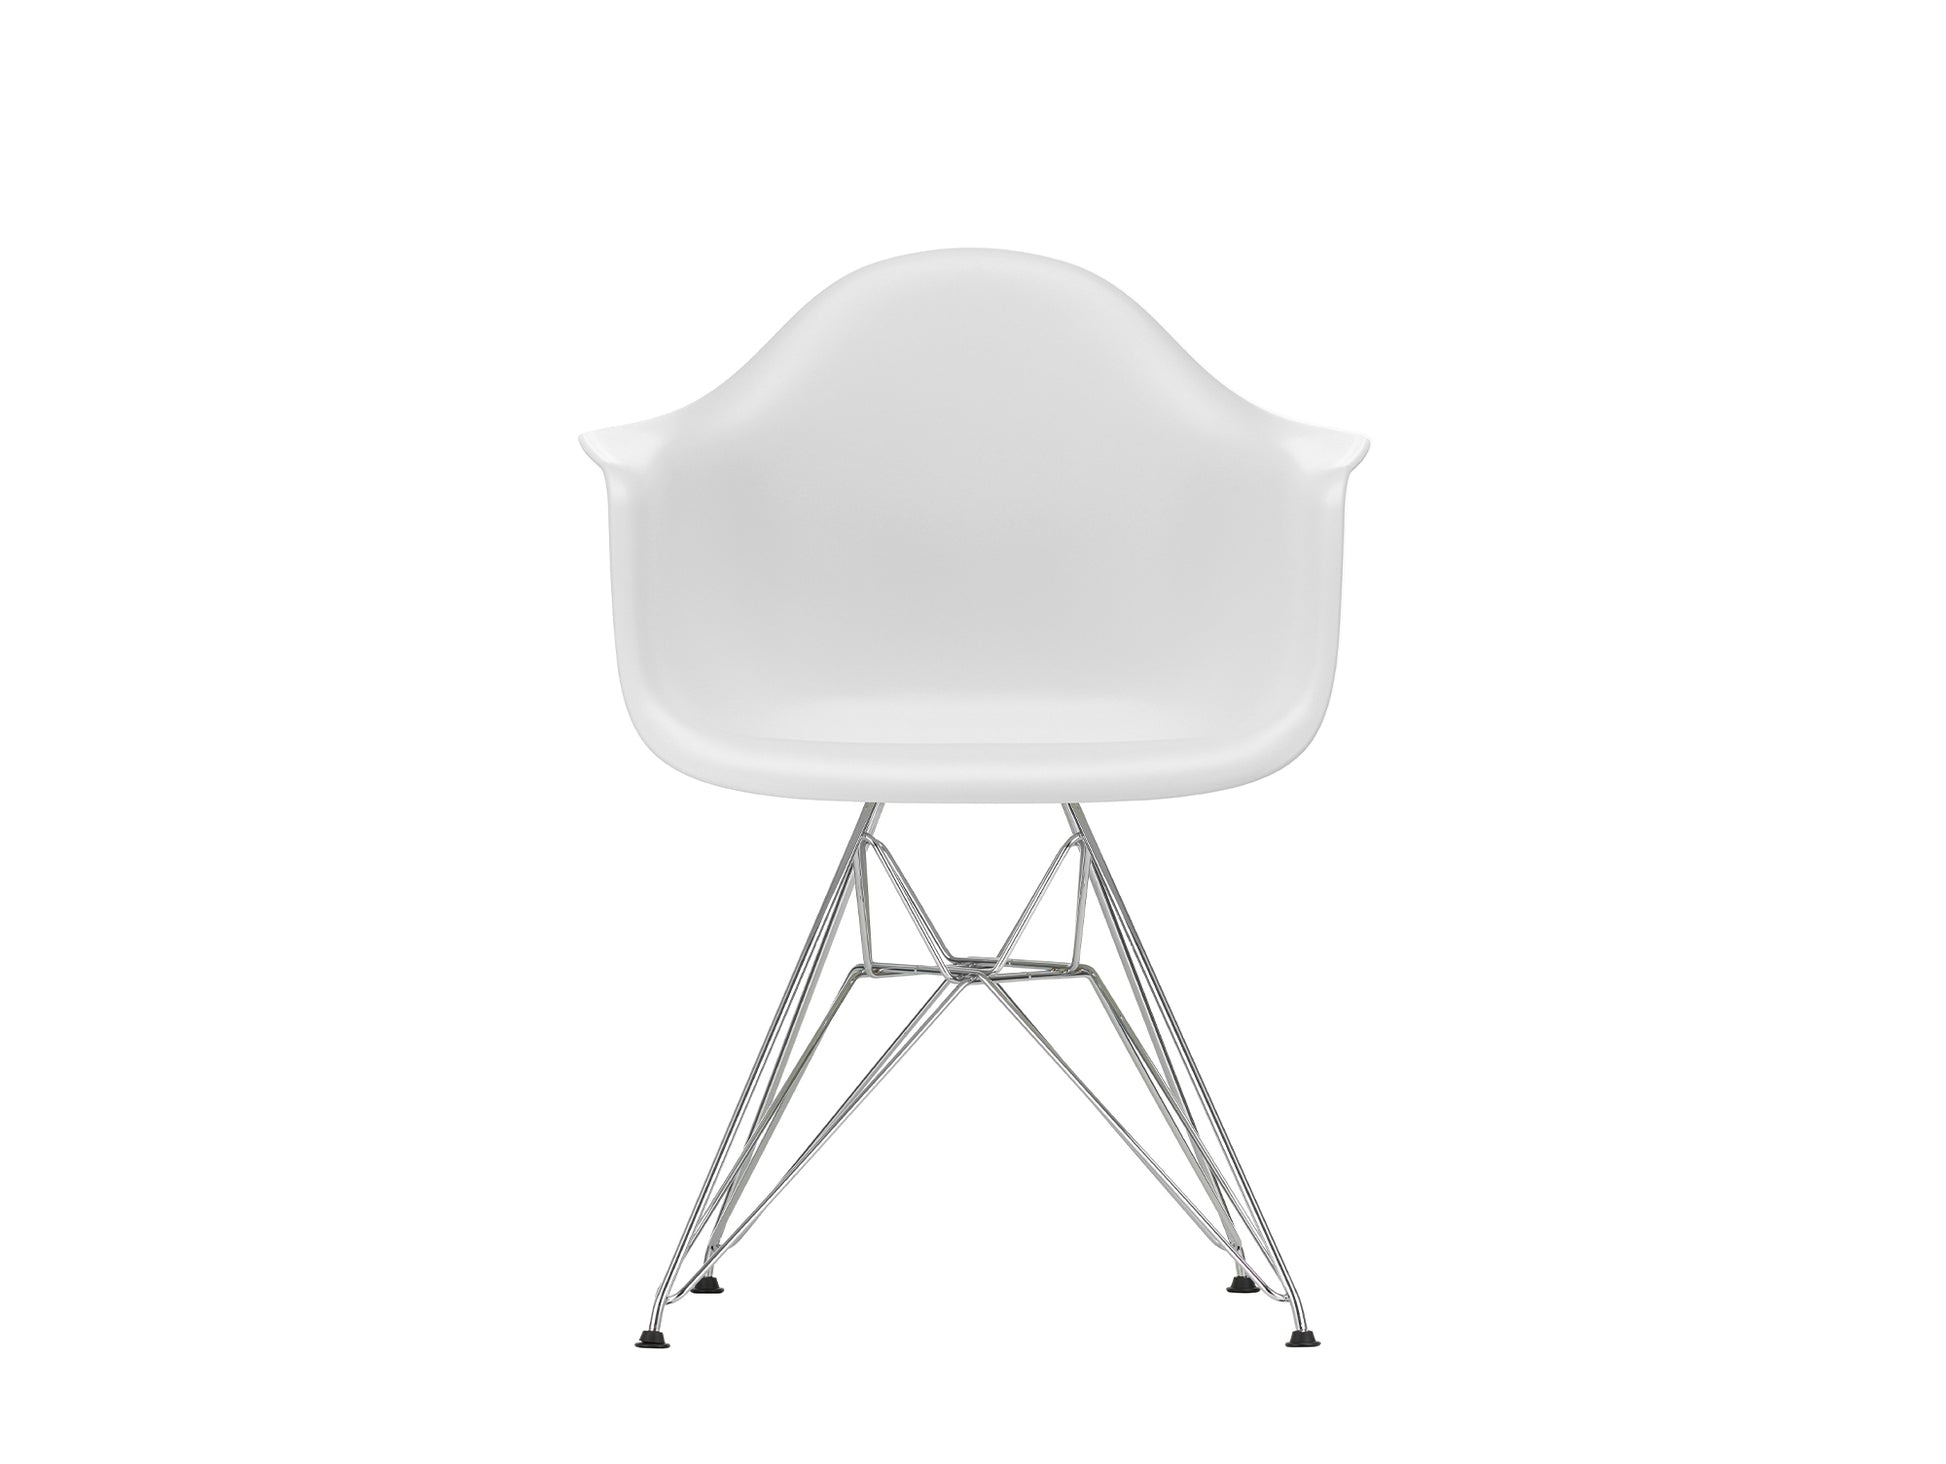 Eames DAR Plastic Armchair RE by Vitra - 85 Cotton White Shell / Chrome Base